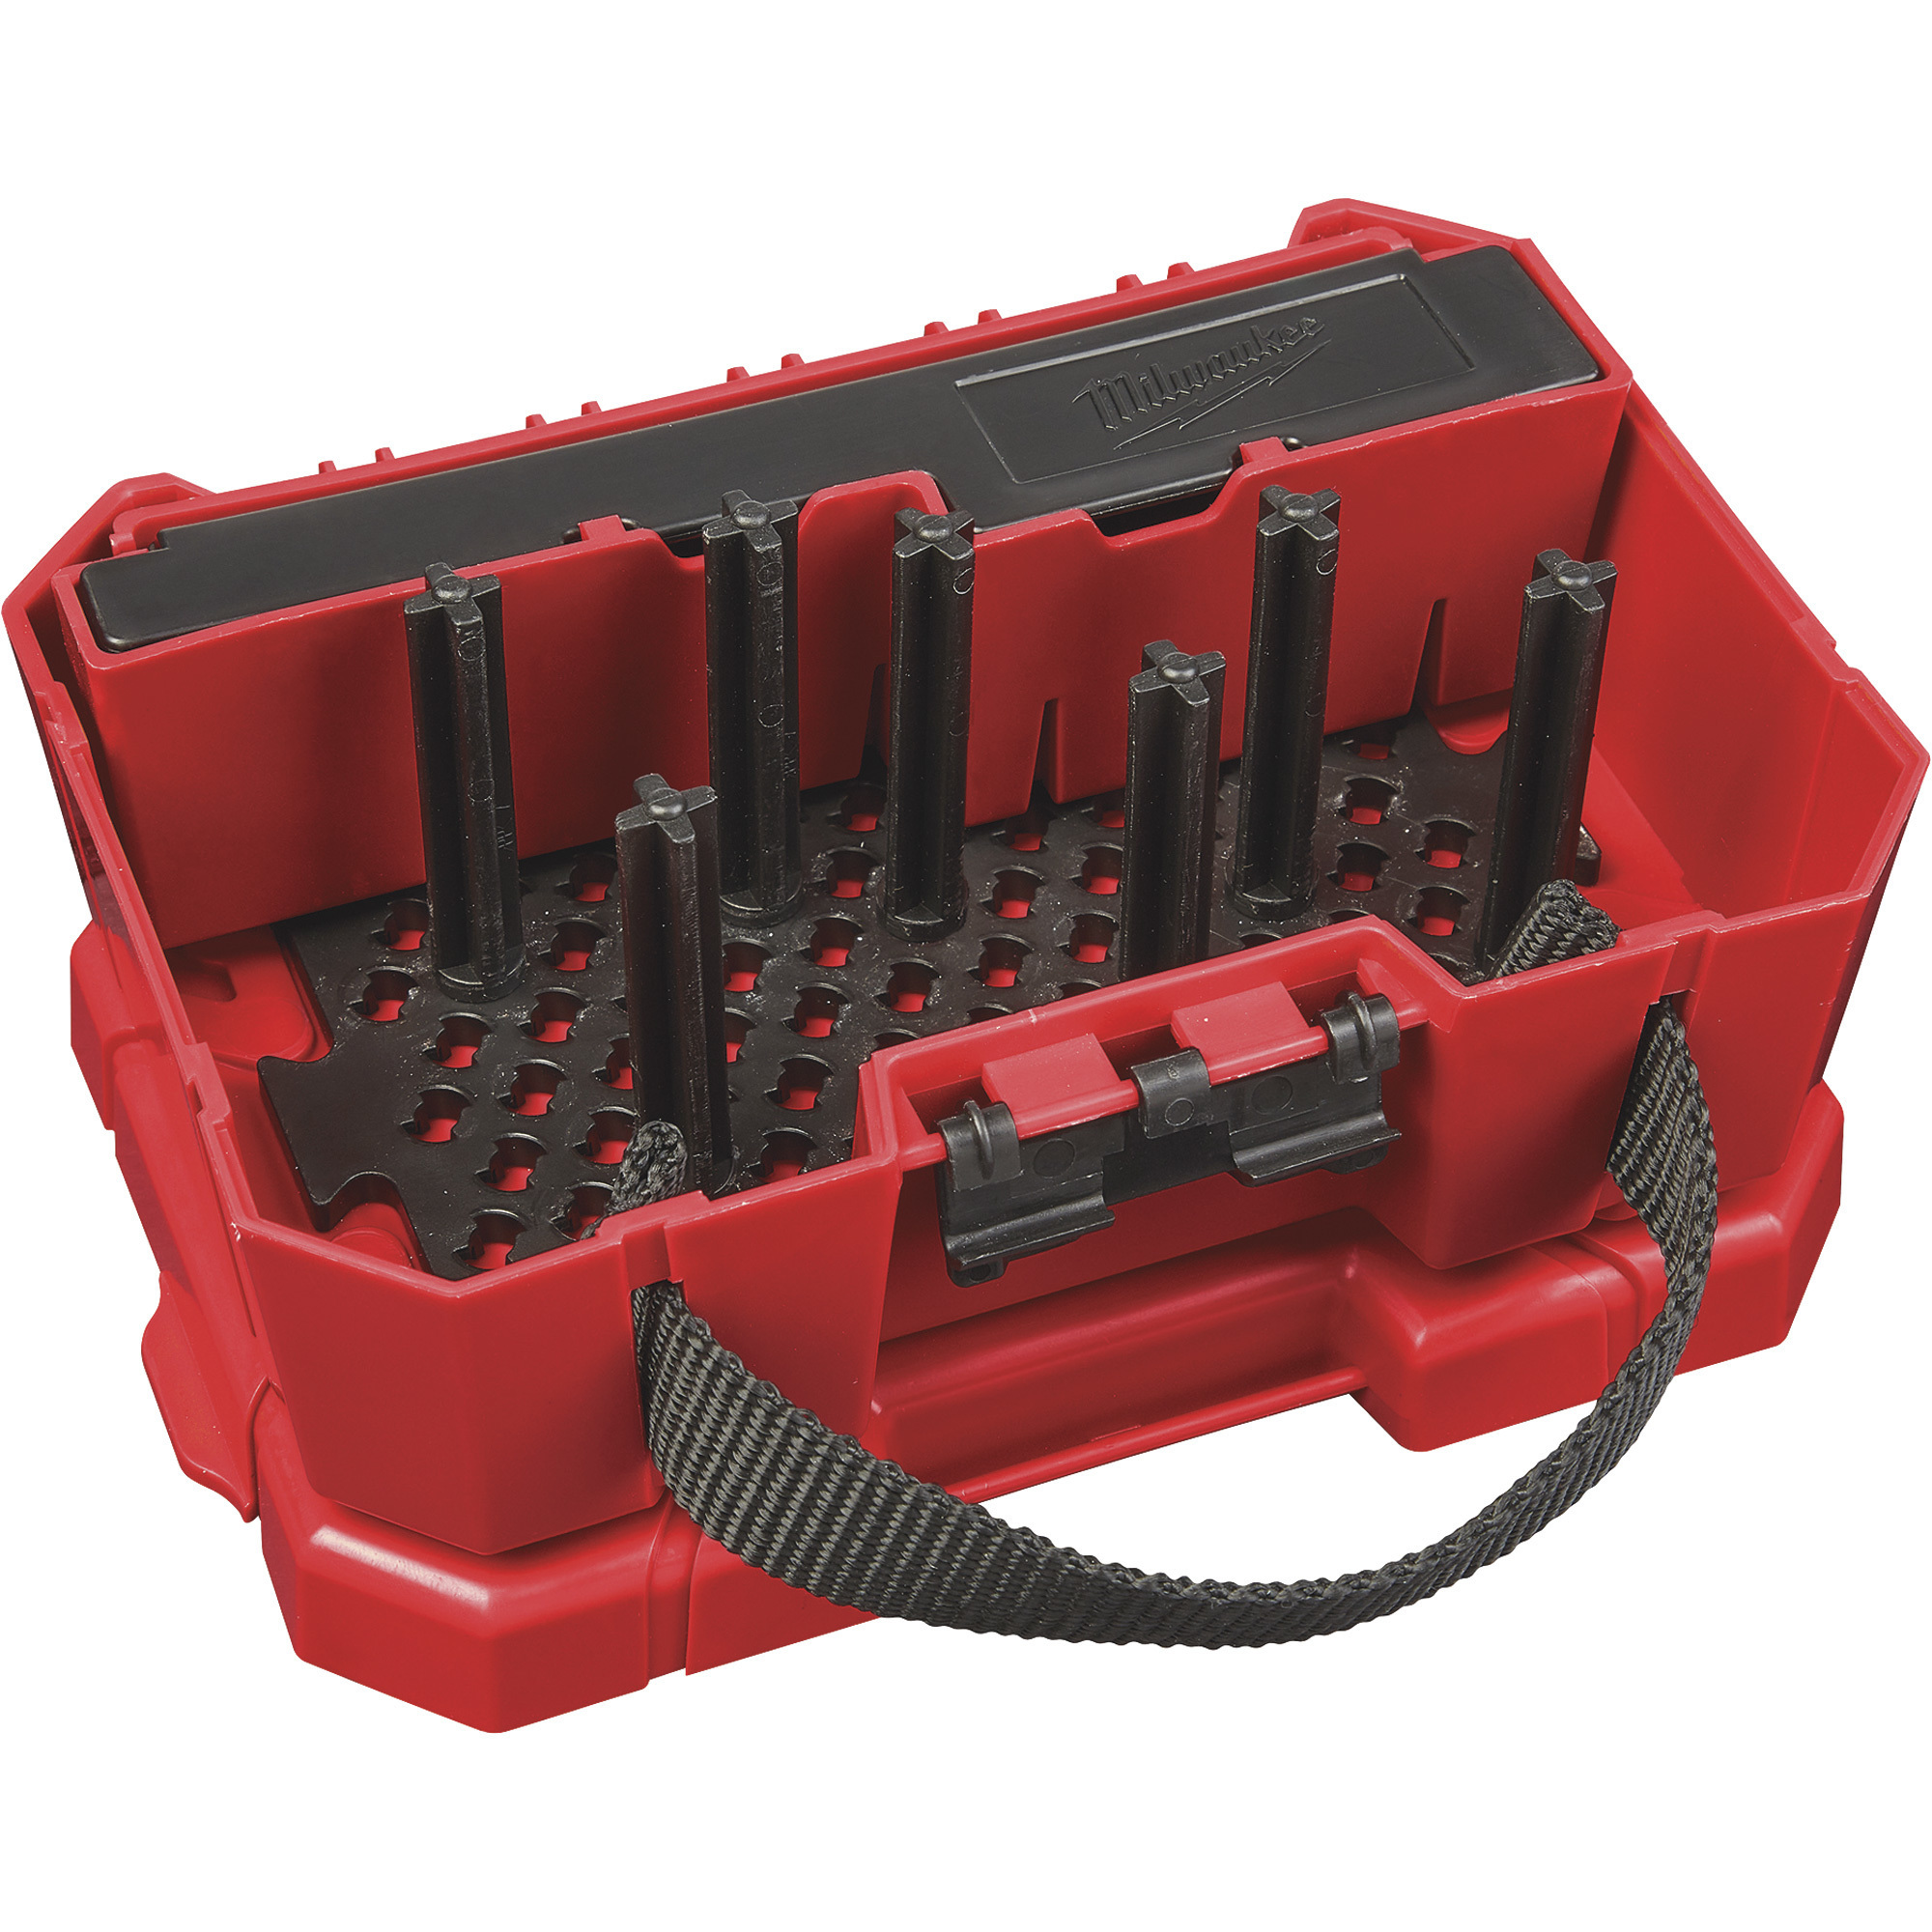 Ernst Manufacturing Plier Organizer — 10-Tool Capacity, Model# 5500